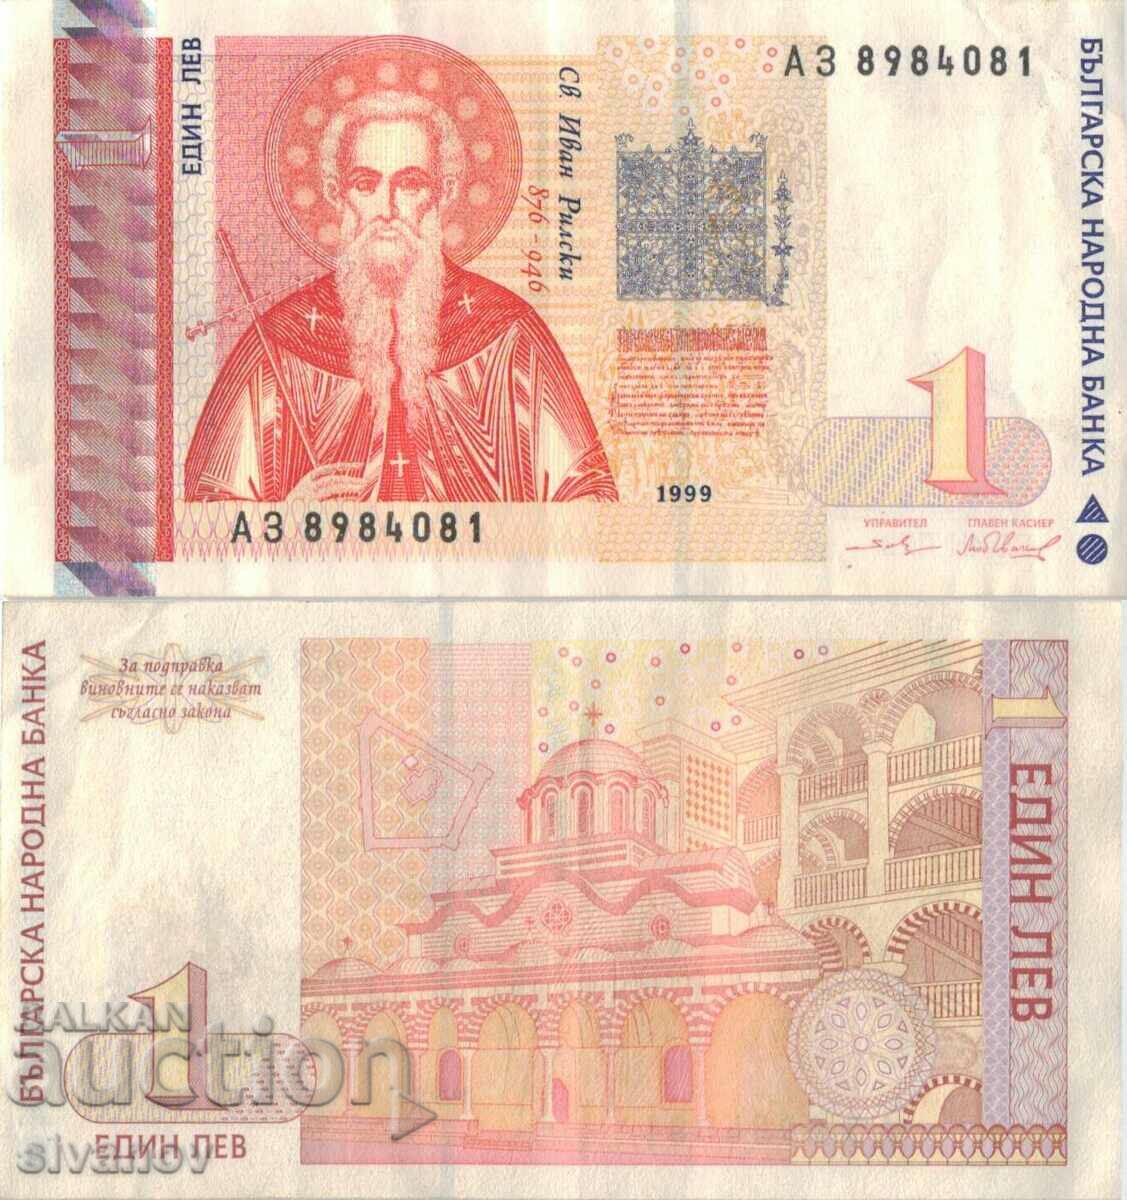 Bulgaria 1 lev 1999 bancnota #5347